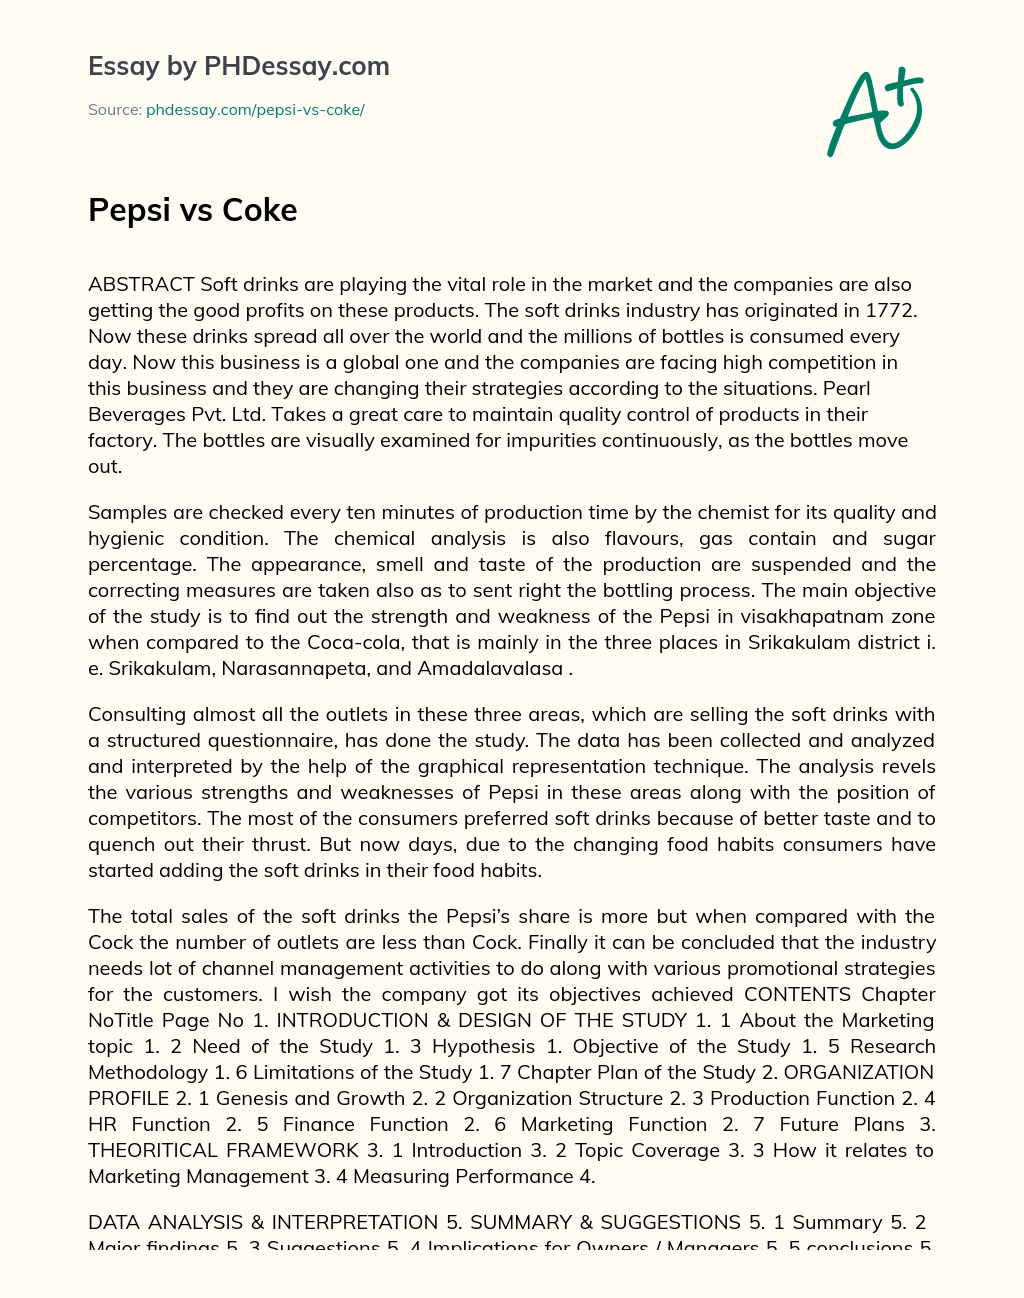 Pepsi vs Coke essay